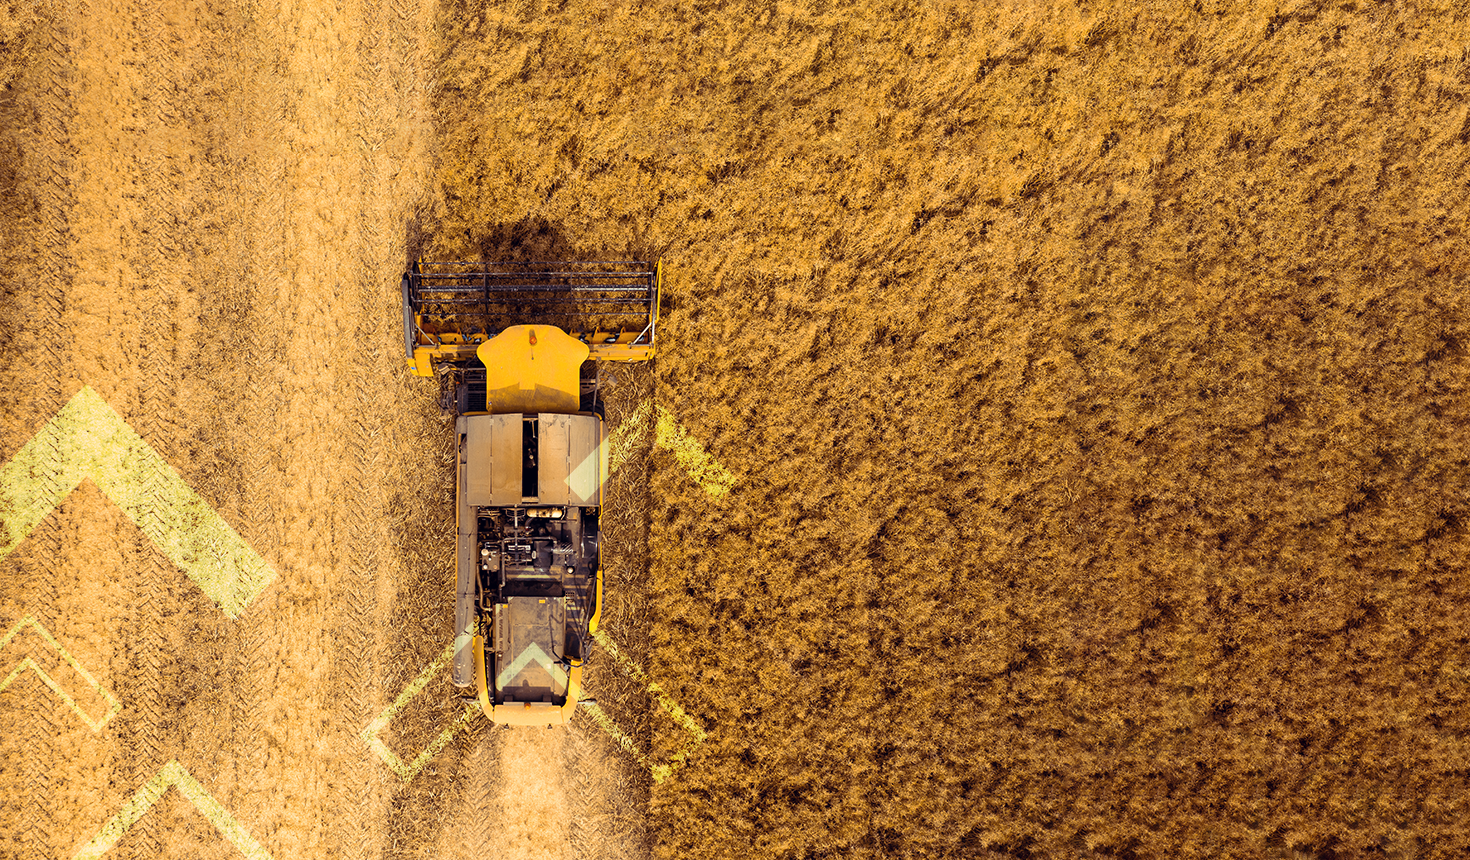 Tractor in Corn Field